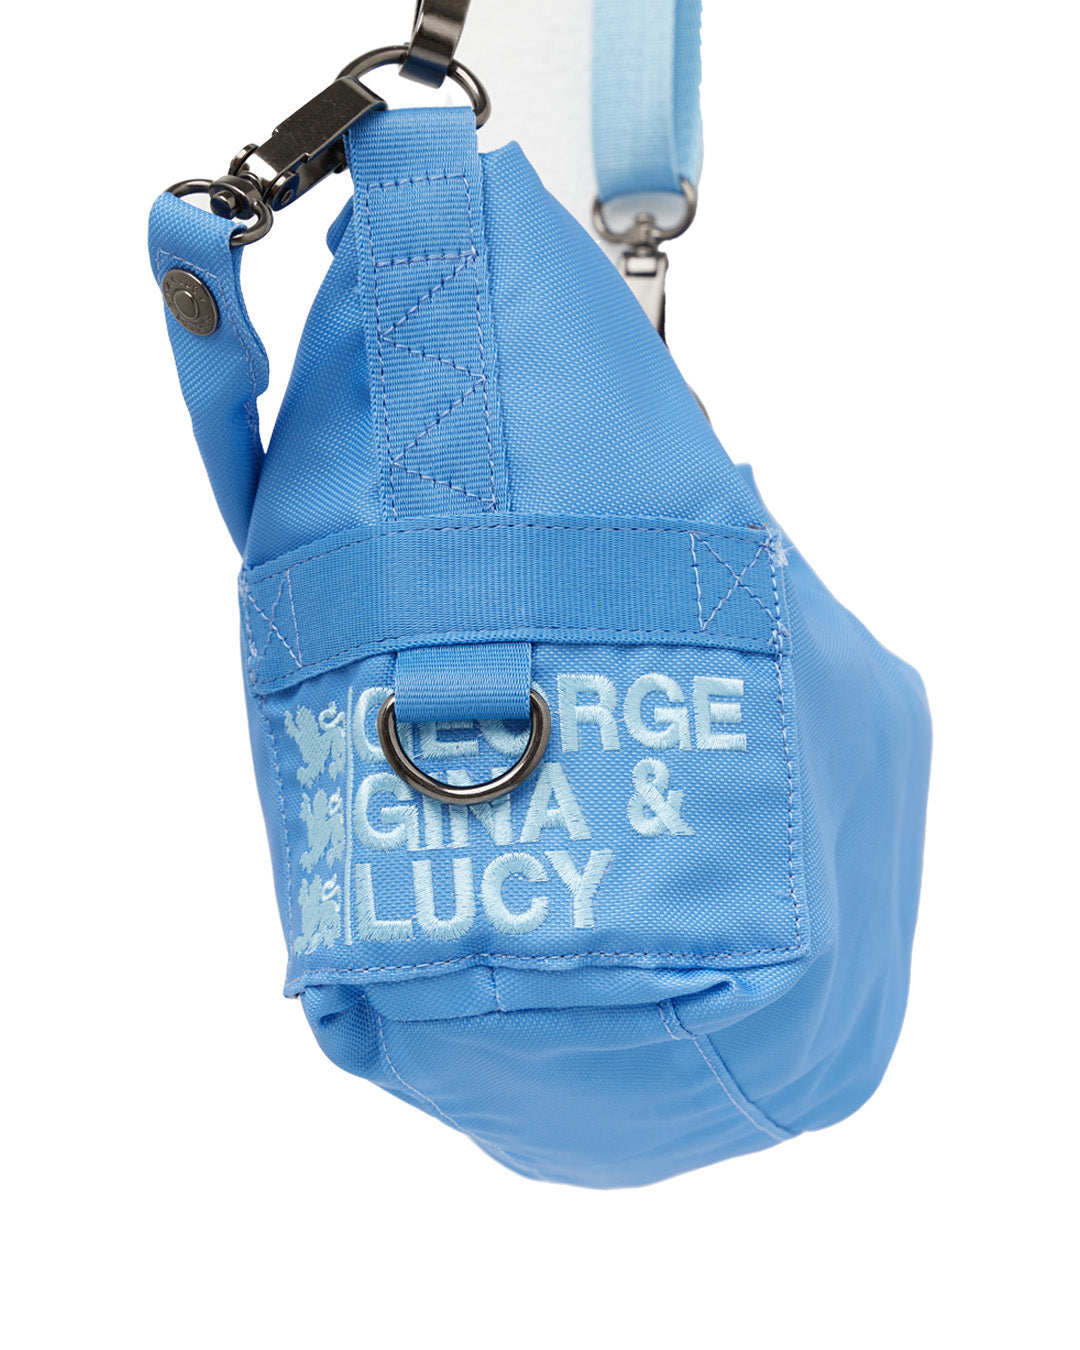 GG&L - 'Wia Bag' Blue